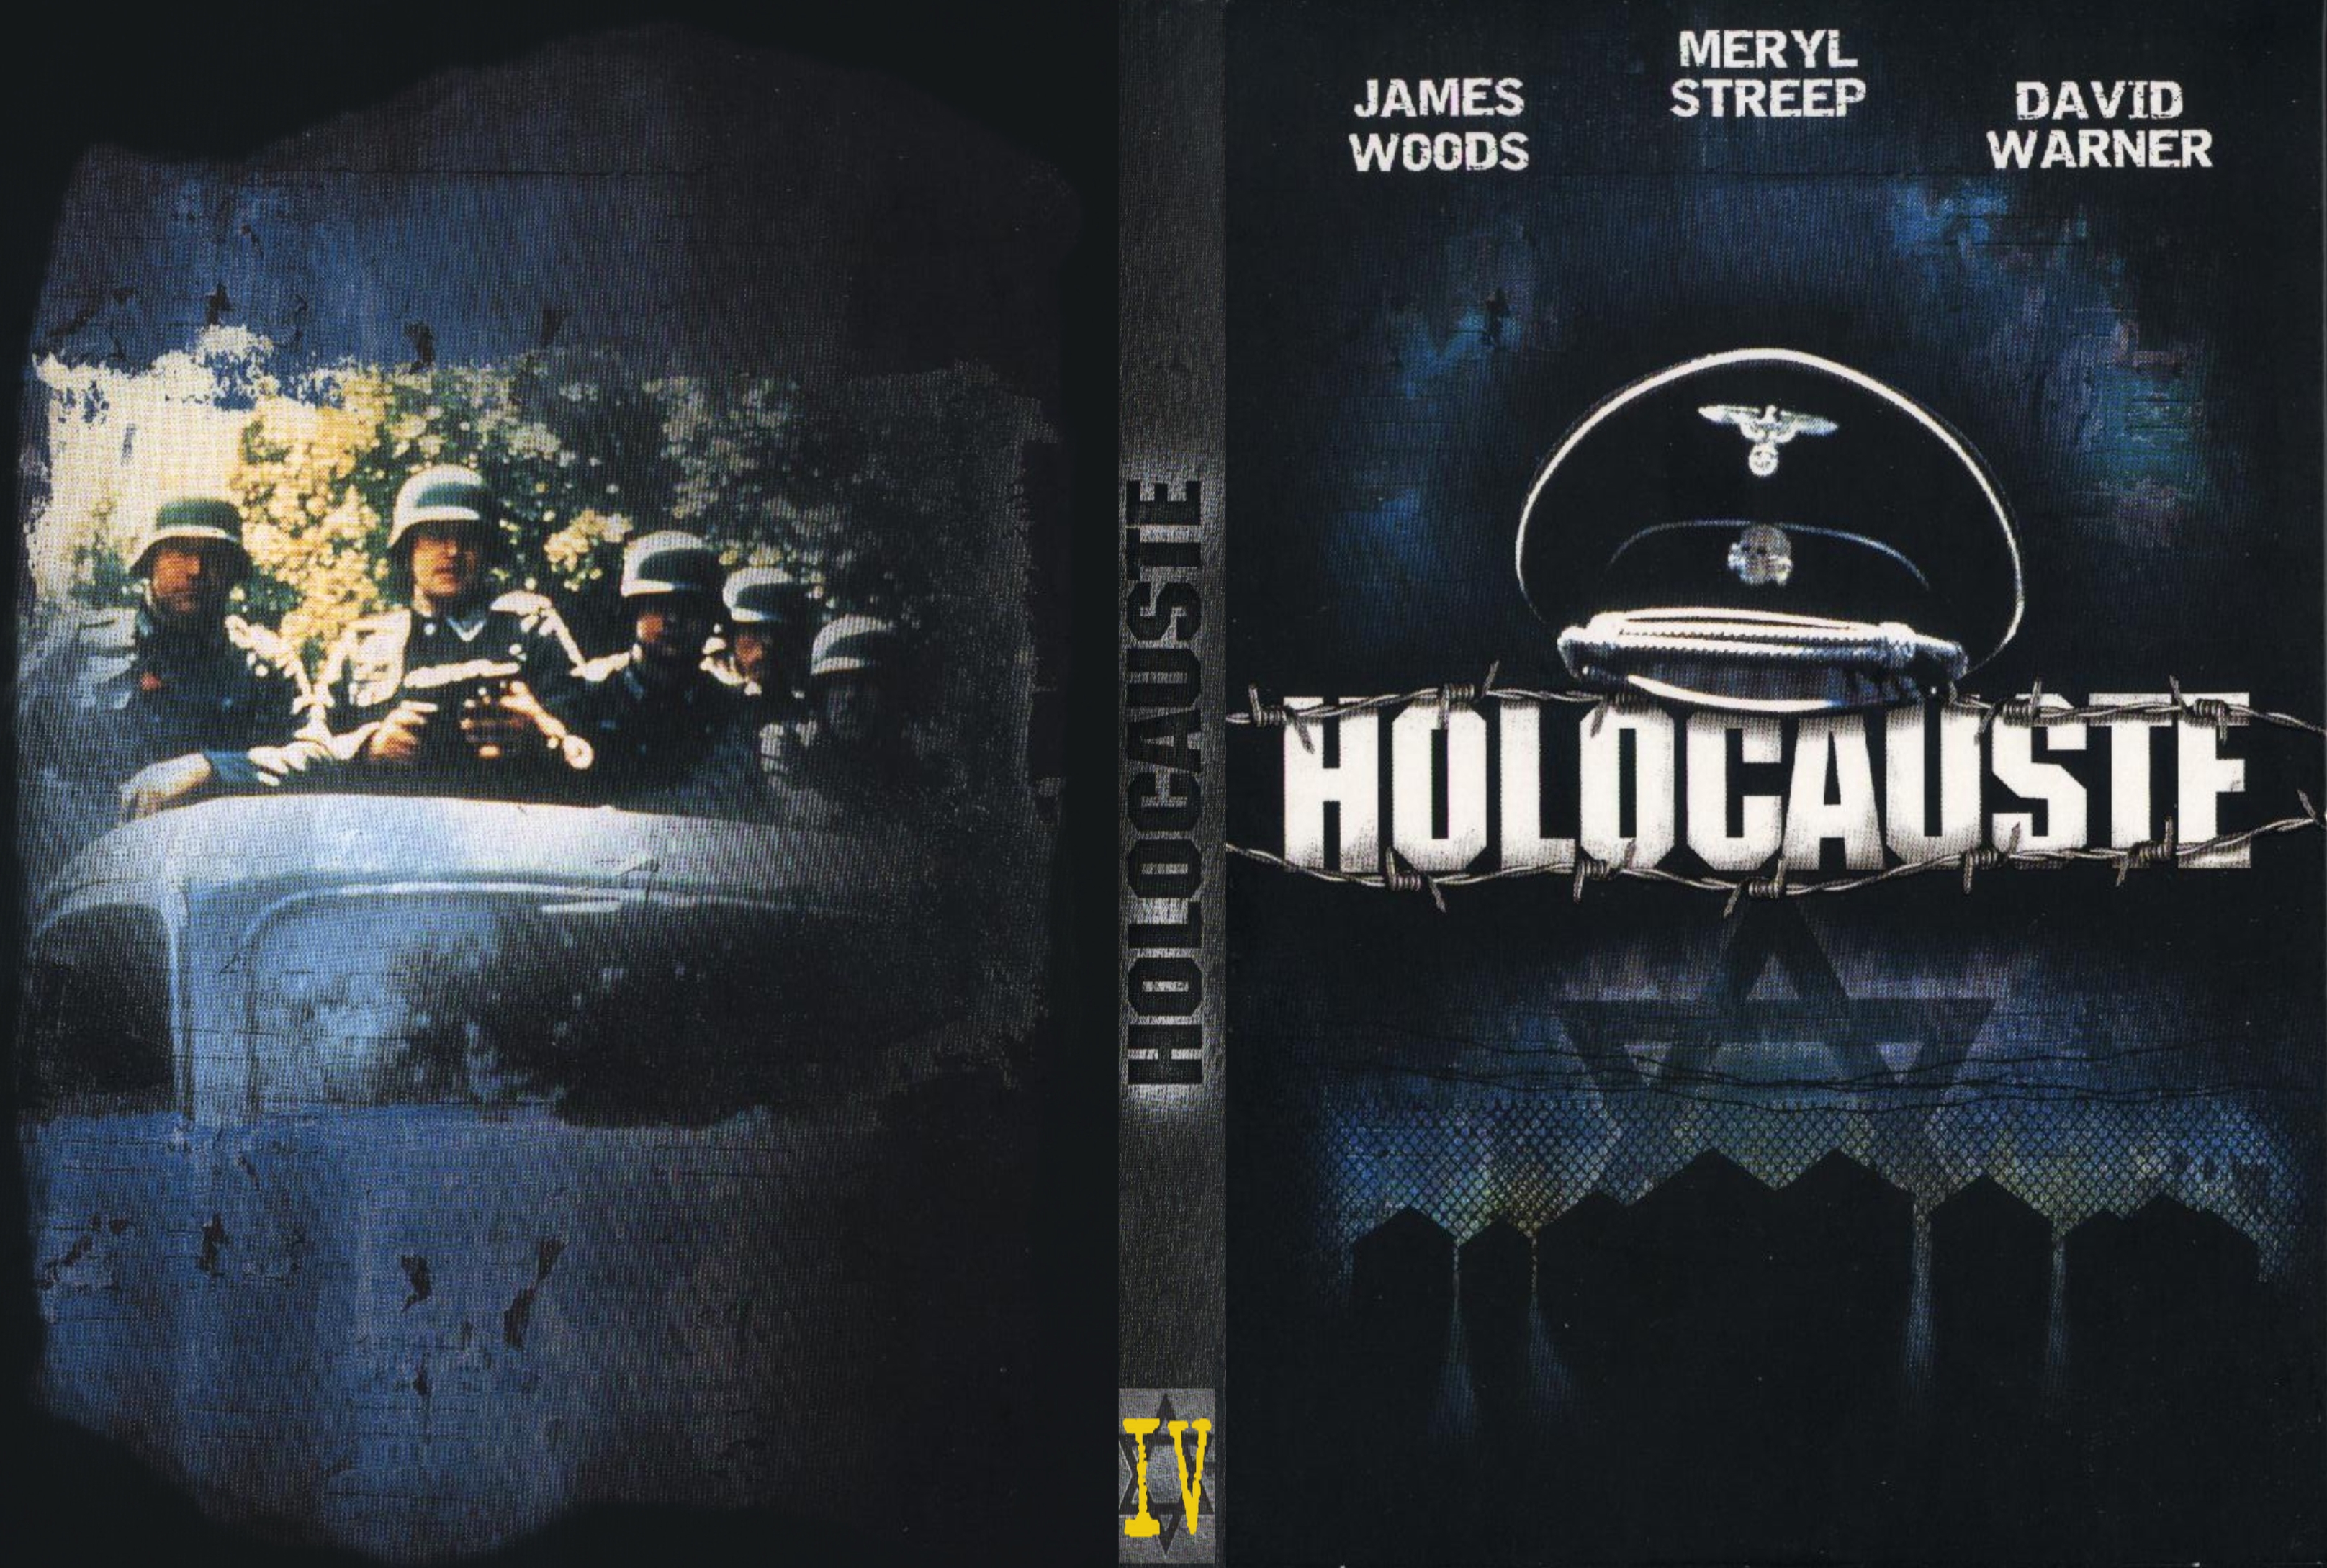 Jaquette DVD Holocauste DVD 4